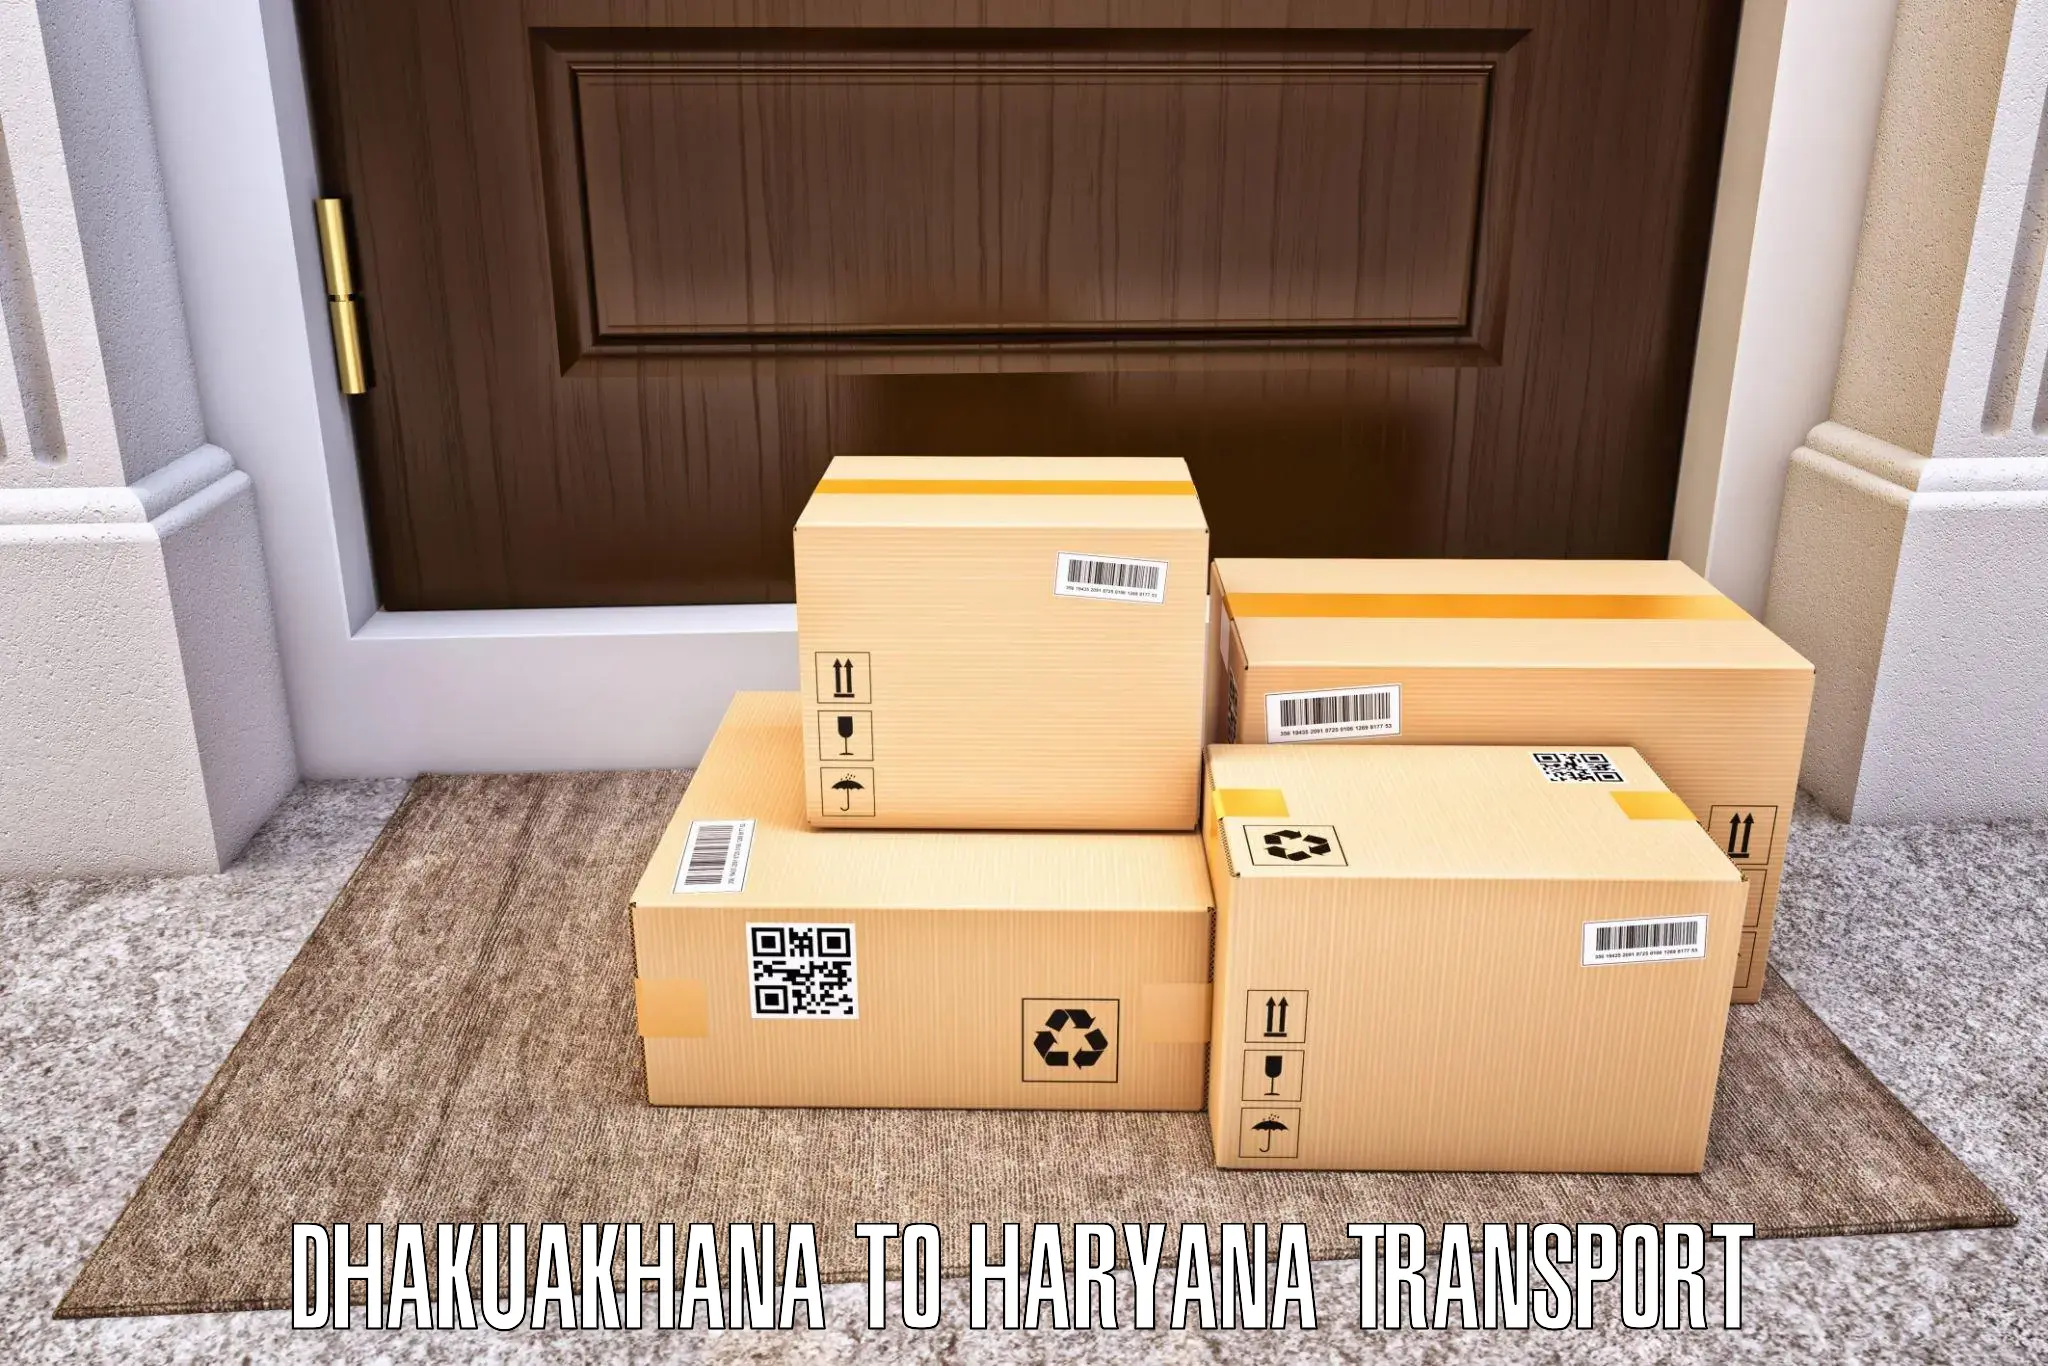 Vehicle transport services Dhakuakhana to Chirya